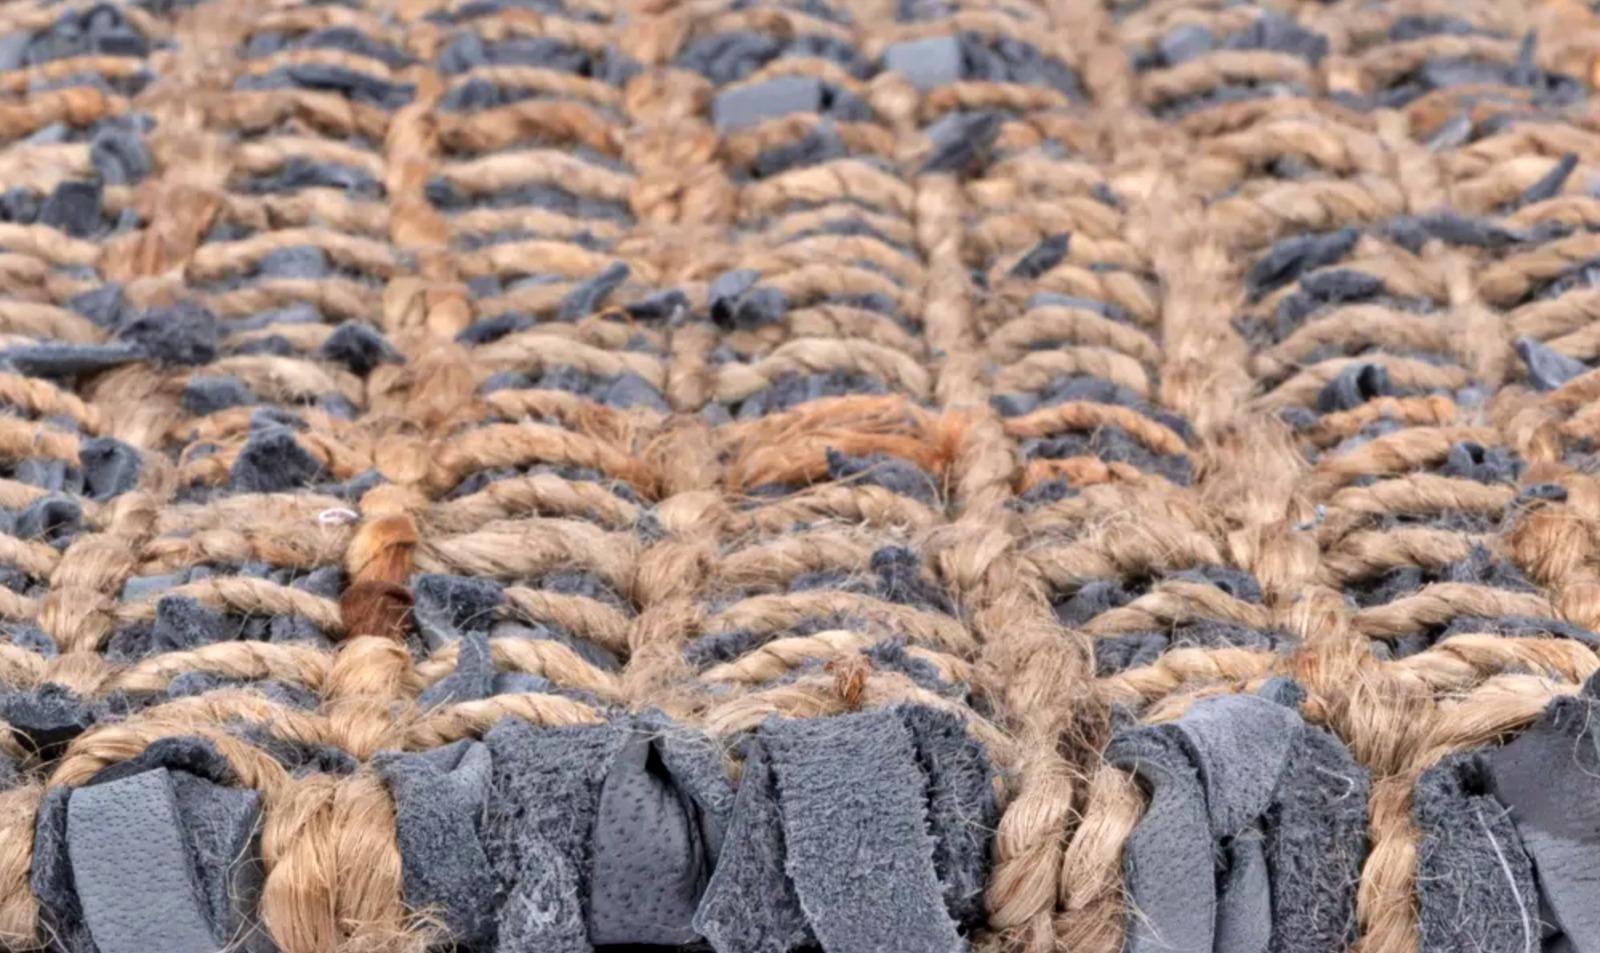 Amazing Blue Leather rug NEW
200cm x 300cm
Composition:
80% Leather
20% vegetable textile fiber
Colour: Blue and brown.